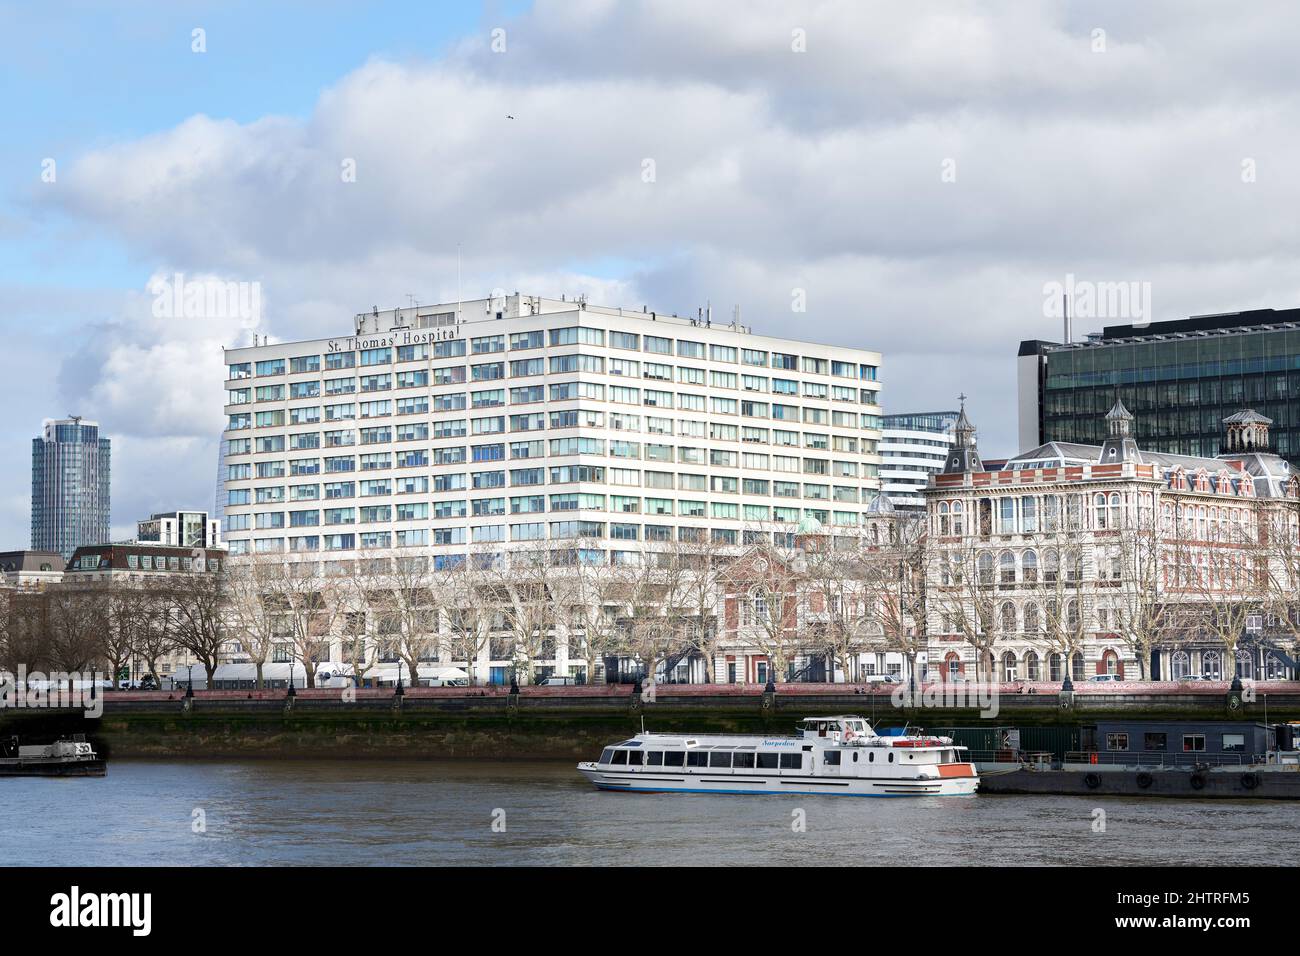 St. Thomas' NHS Hospital, am Ufer der Themse, London, England. Stockfoto